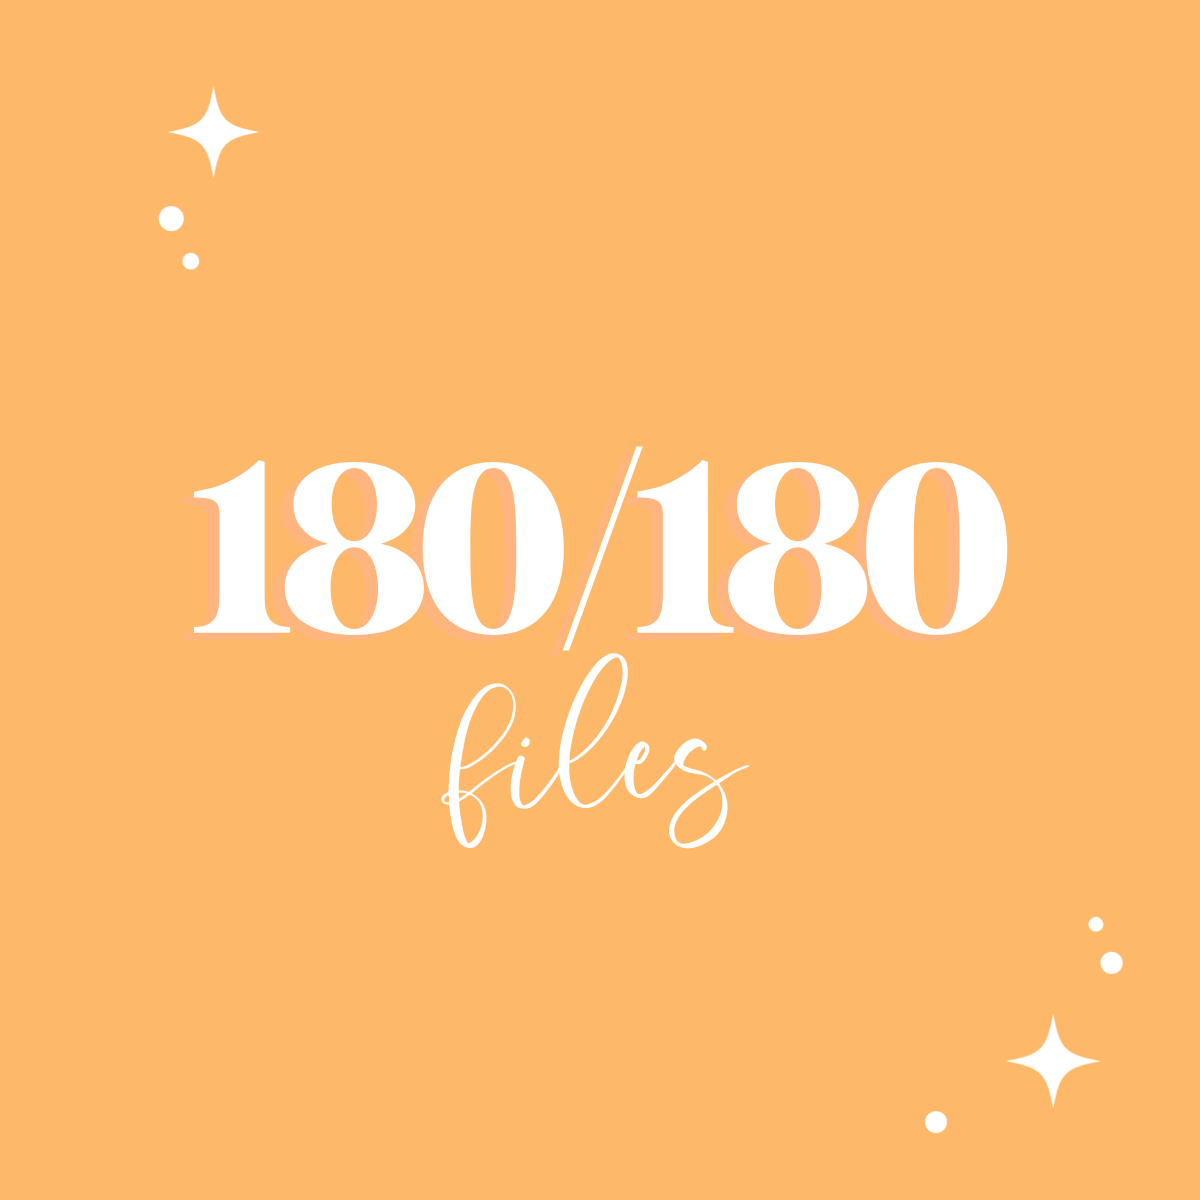 180/180 Files & Buffers